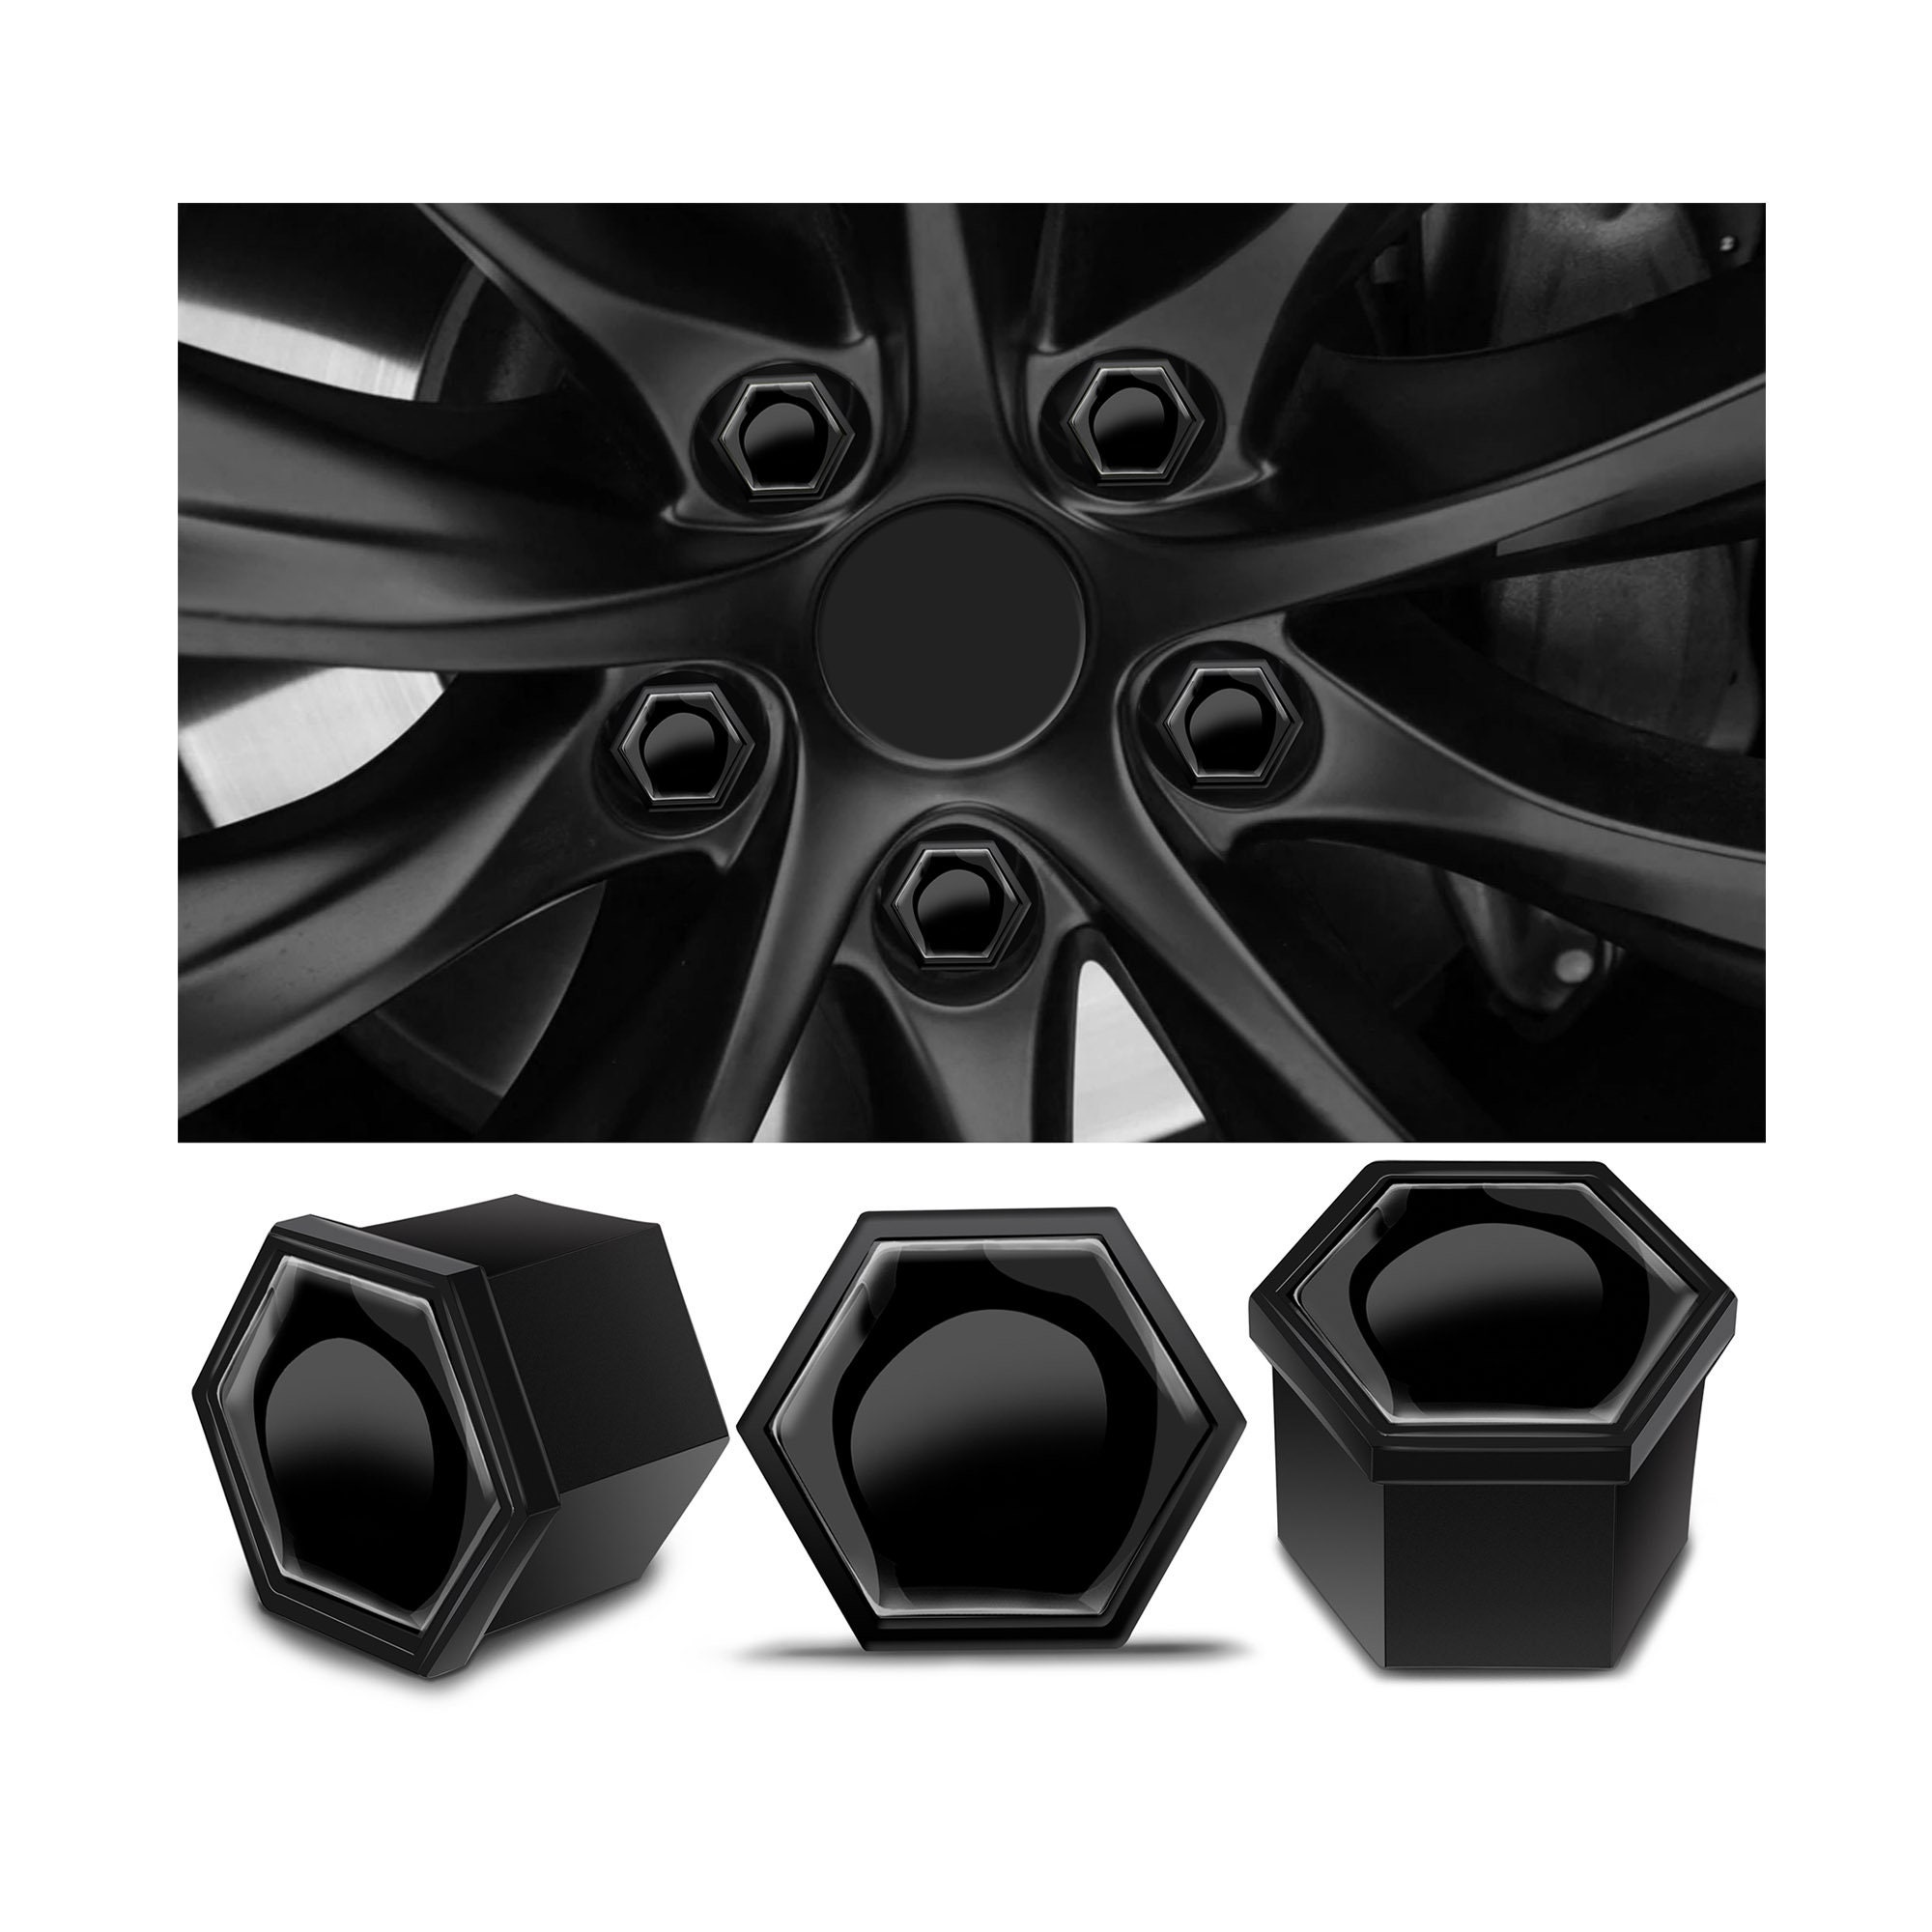 16x Wheel Nut Caps 4x Locking Bolt Covers Caps Universal Black